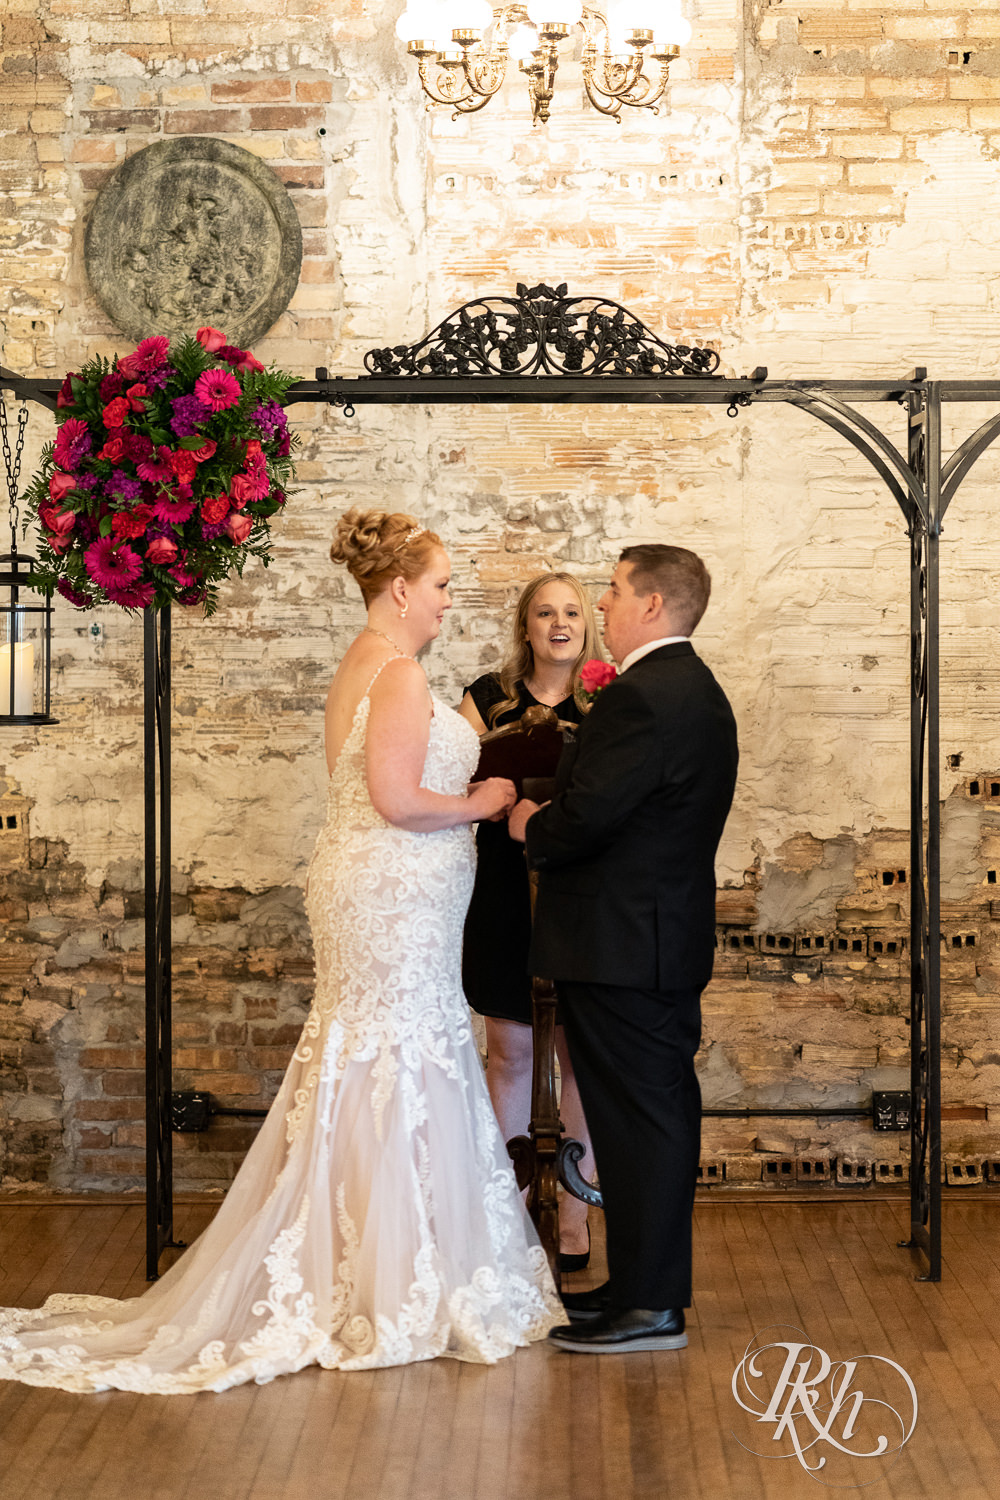 Indoor wedding ceremony at Kellerman's Event Center in White Bear Lake, Minnesota.